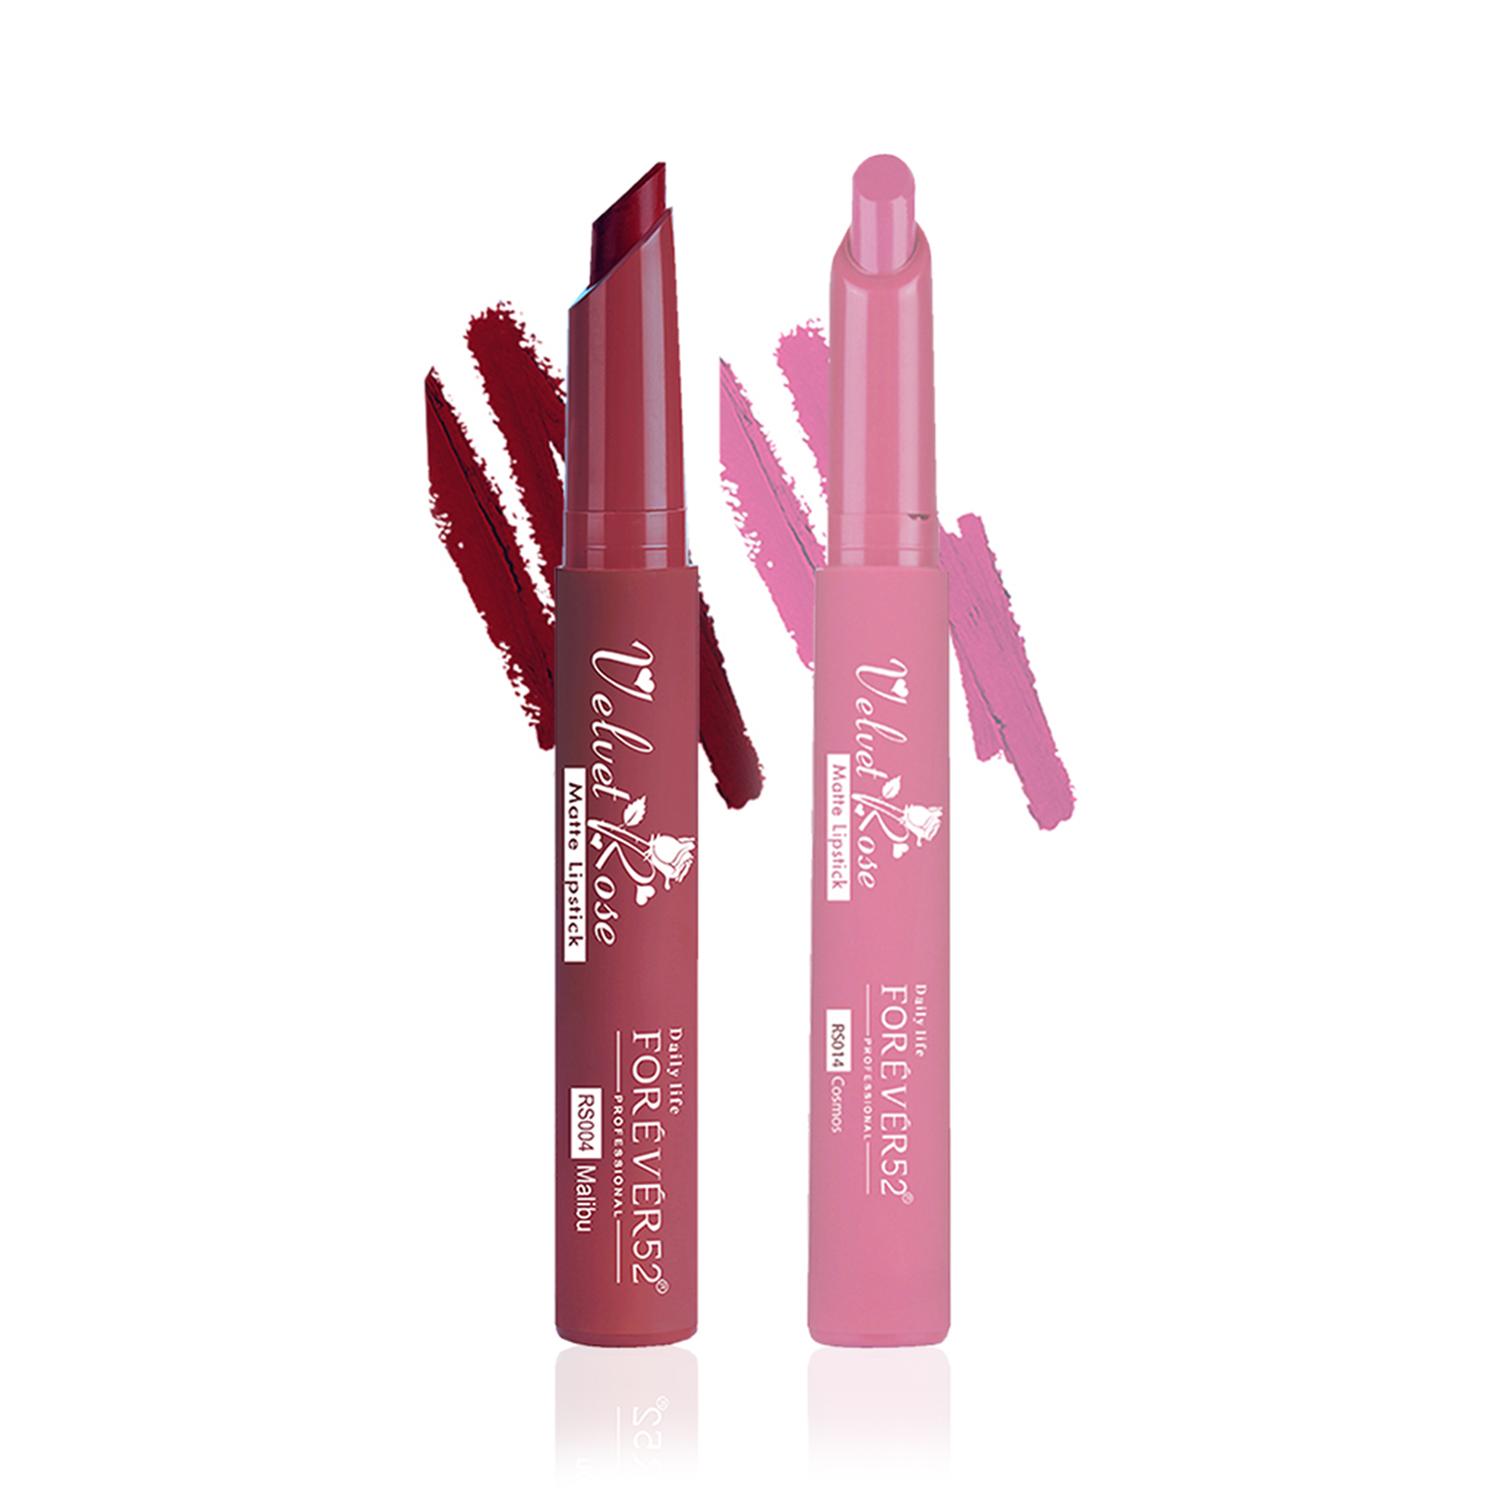 Daily Life Forever52 Velvet Rose Matte Lipstick Set of 2 Crayons Combo (Malibu,Cosmos)